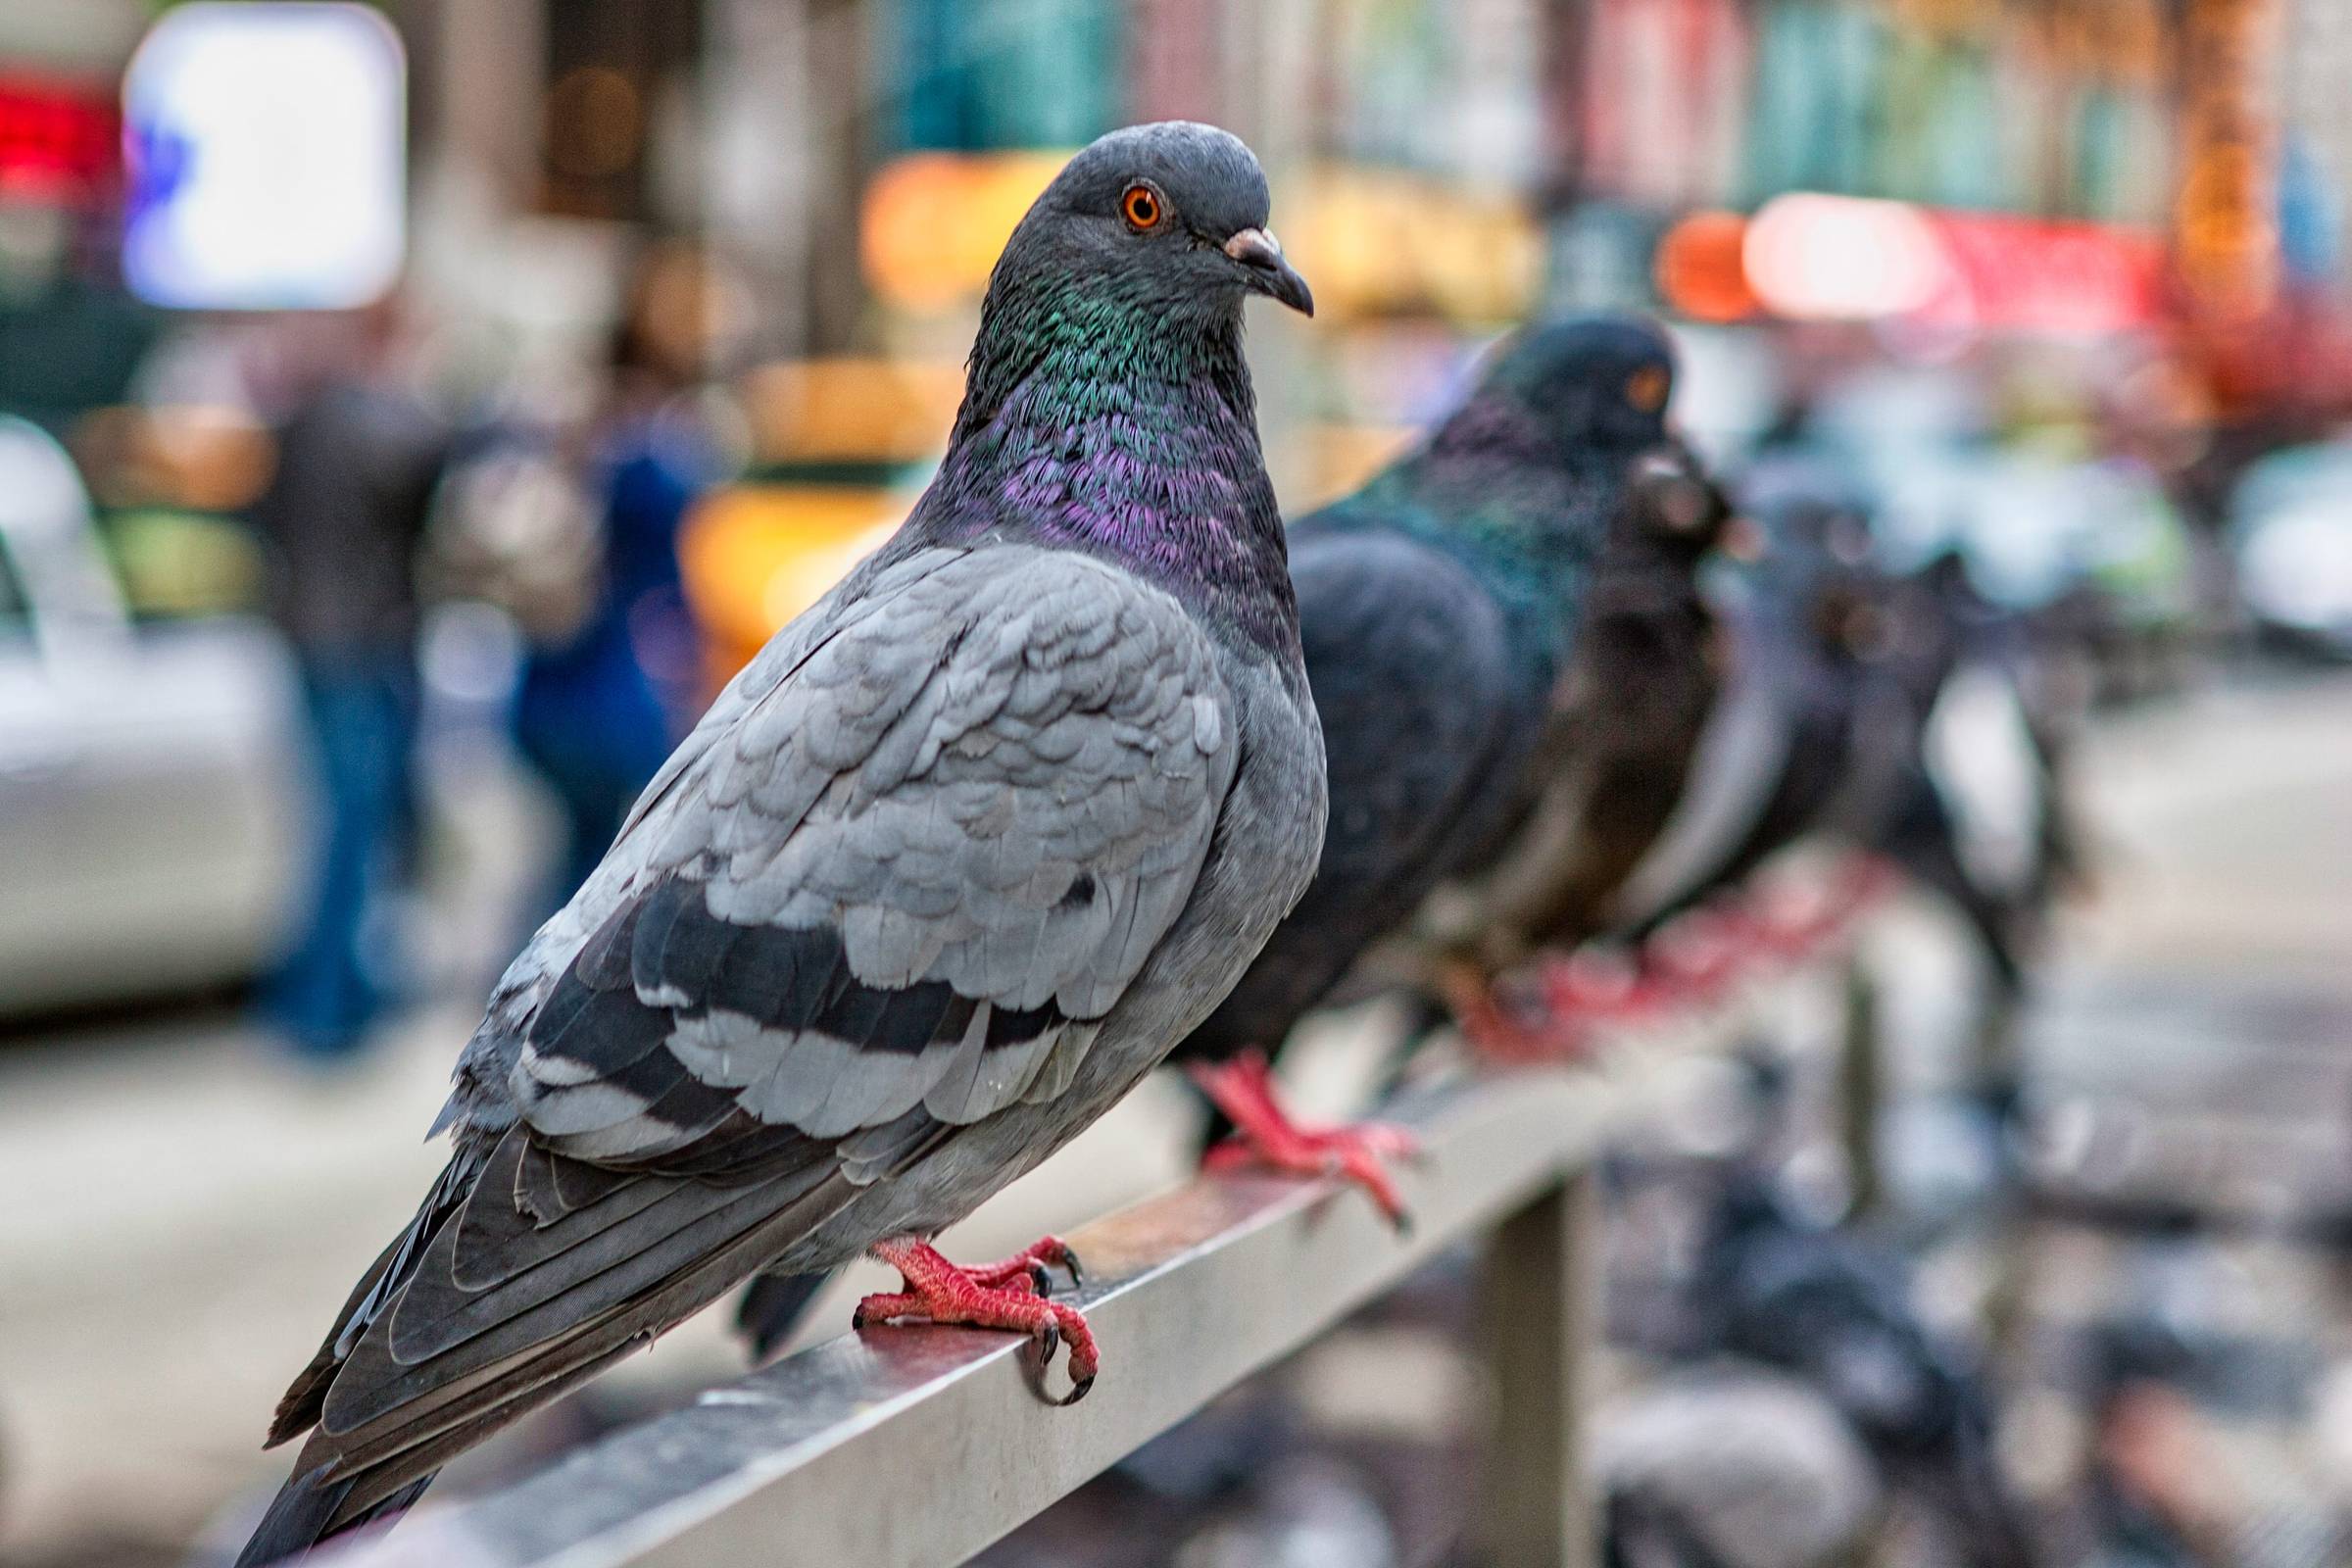 Pigeon Control & Deterrents in NYC